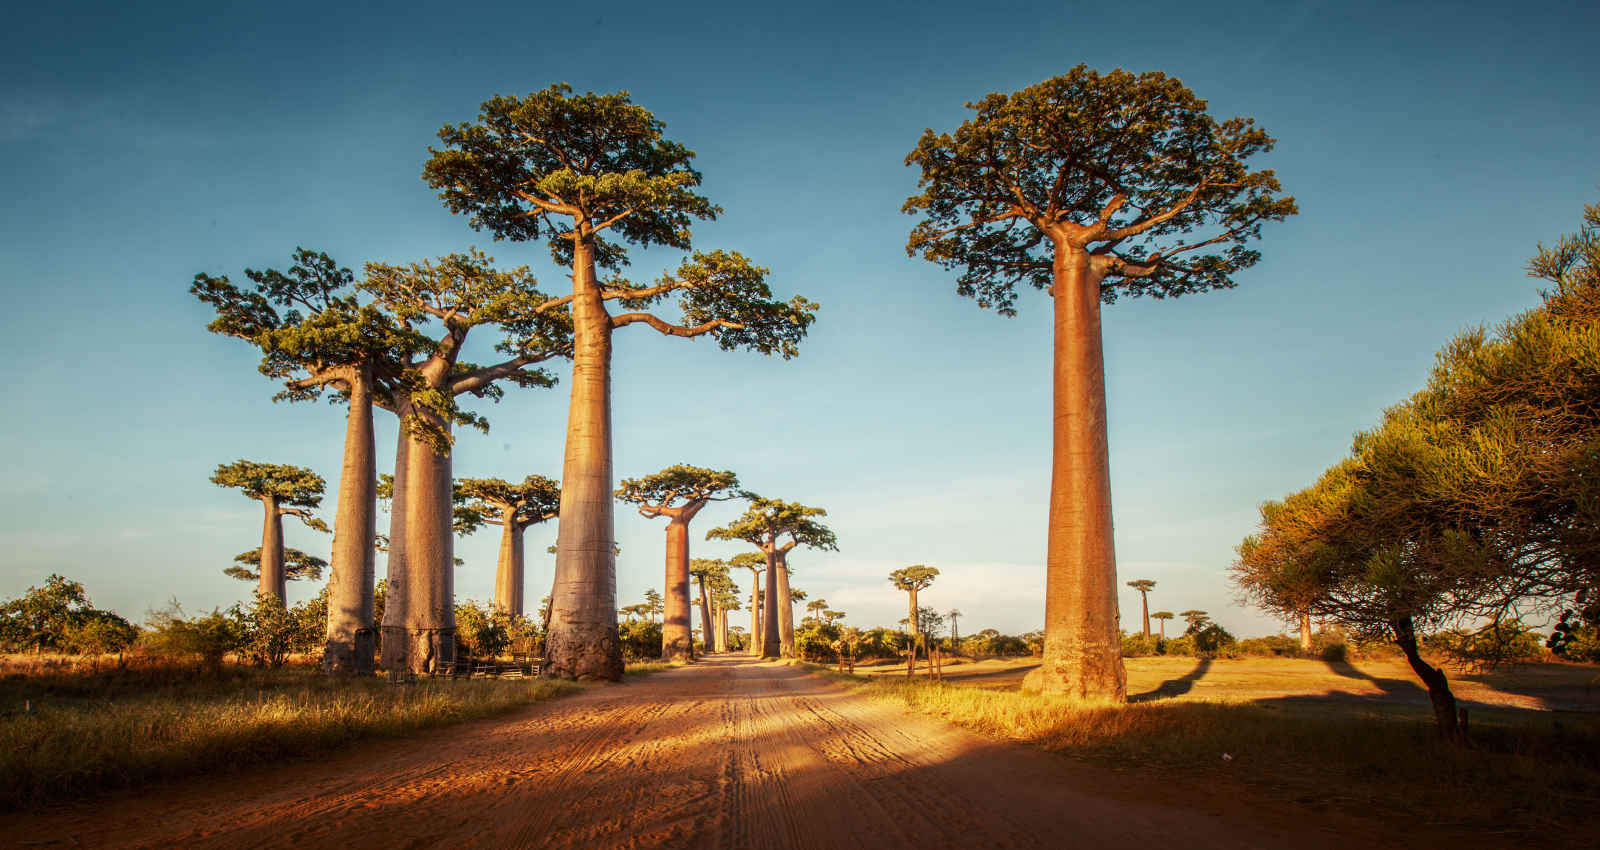 Morondava, Madagascar